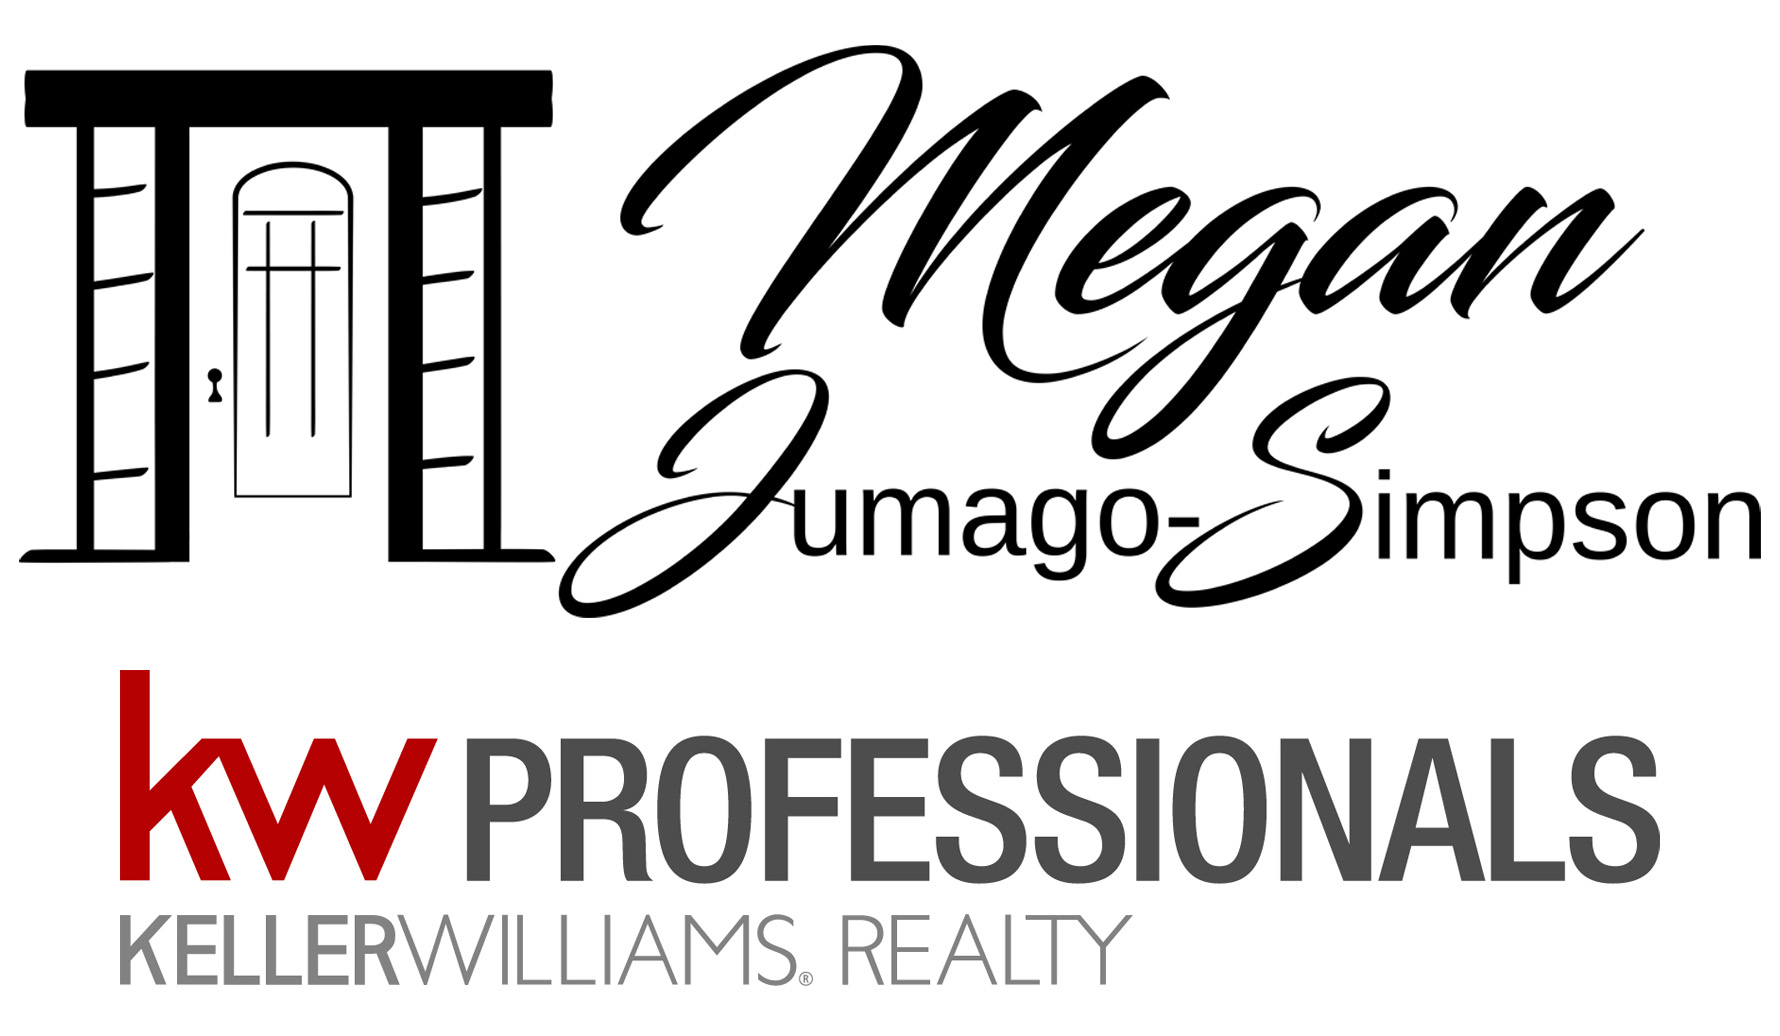 Megan Jumago-Simpson with Keller Williams Realty Professionals